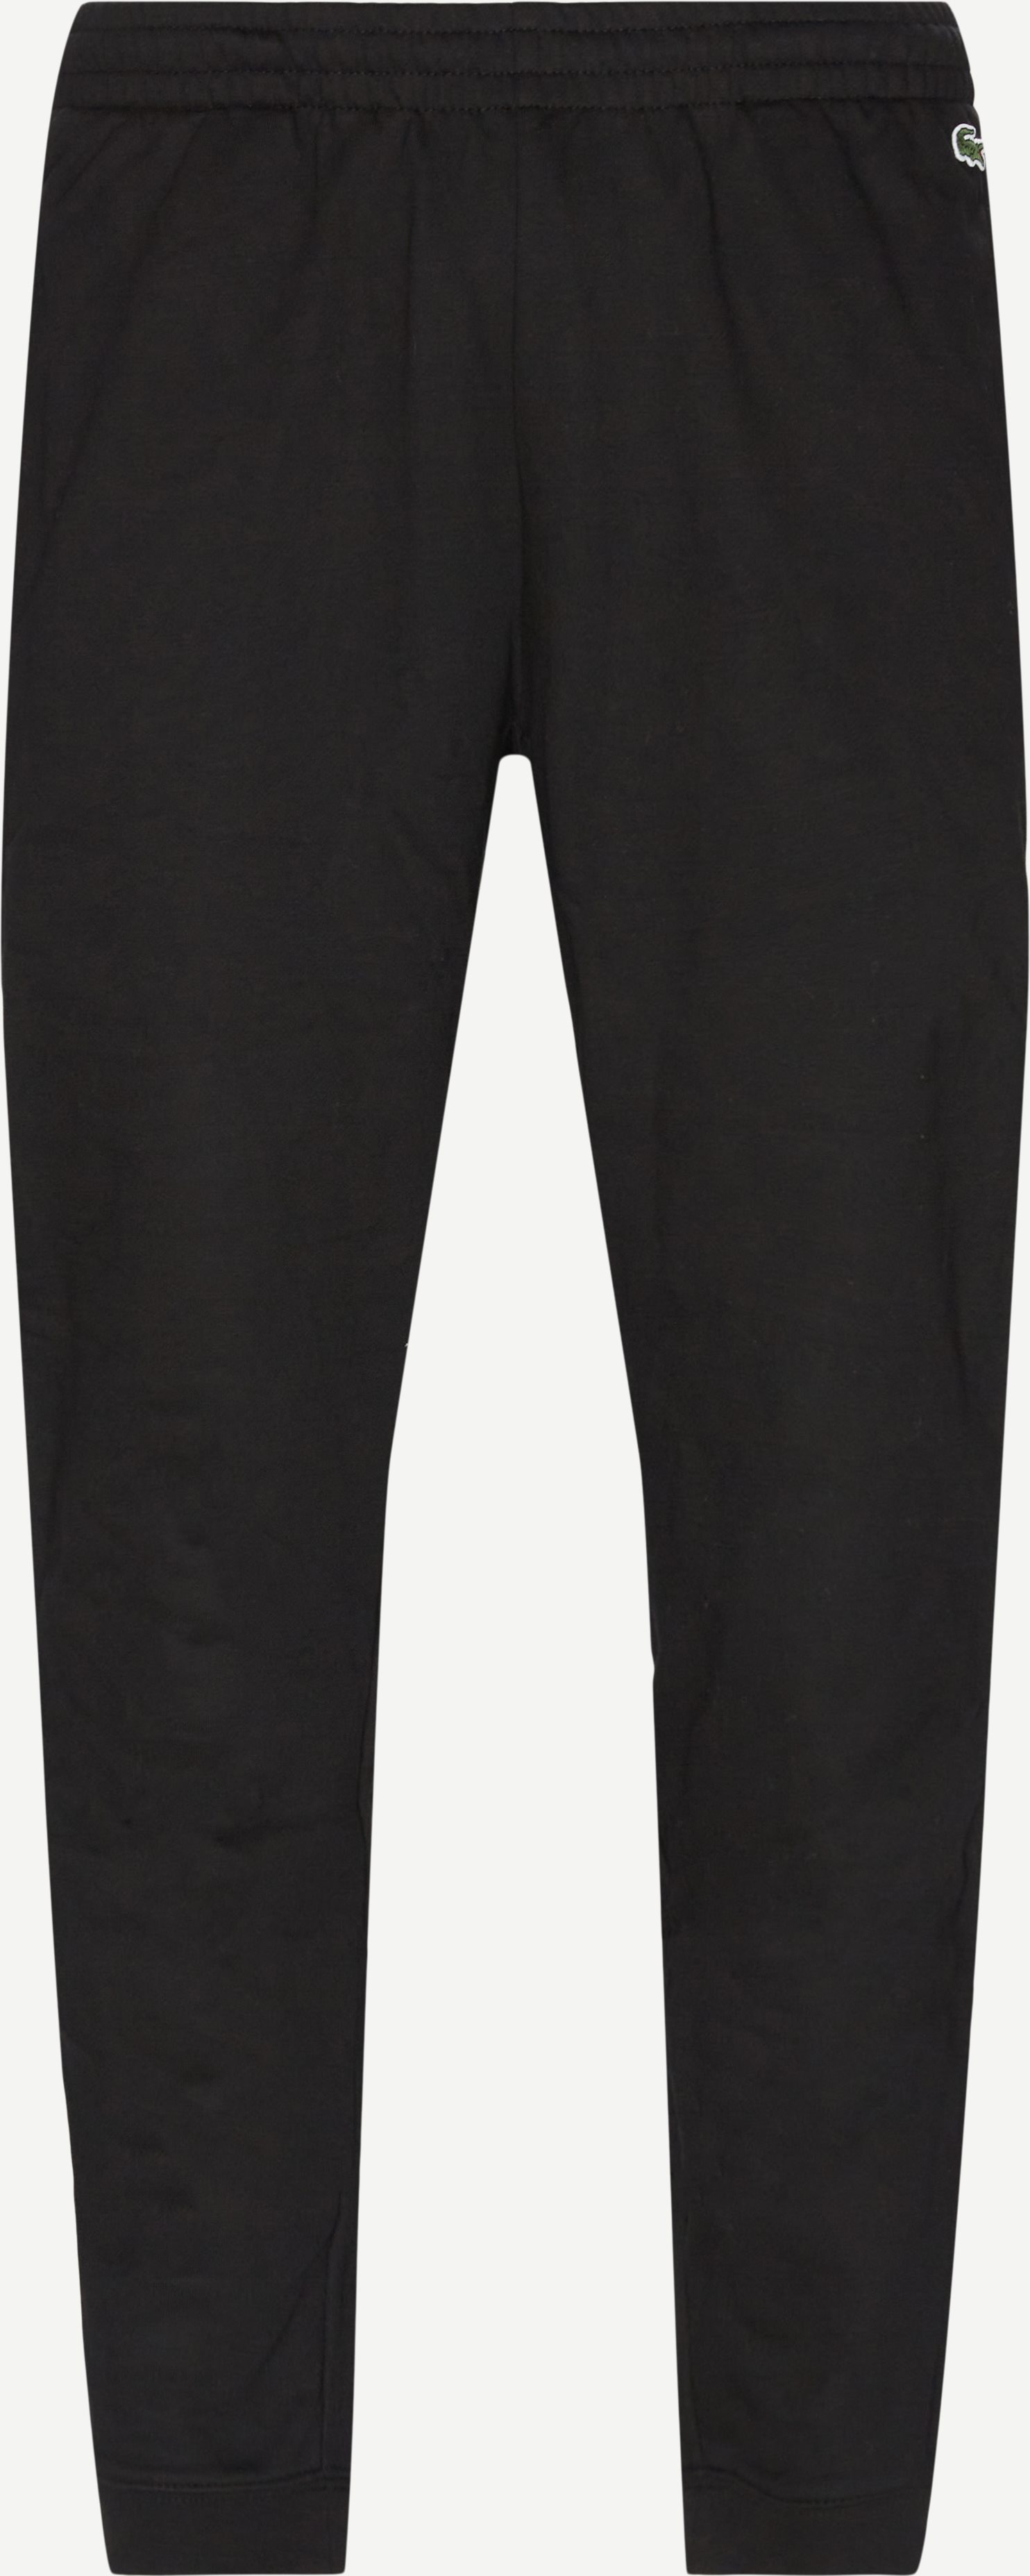 Signature Striped Colorblock Fleece Jogging Pants - Bukser - Tapered fit - Sort